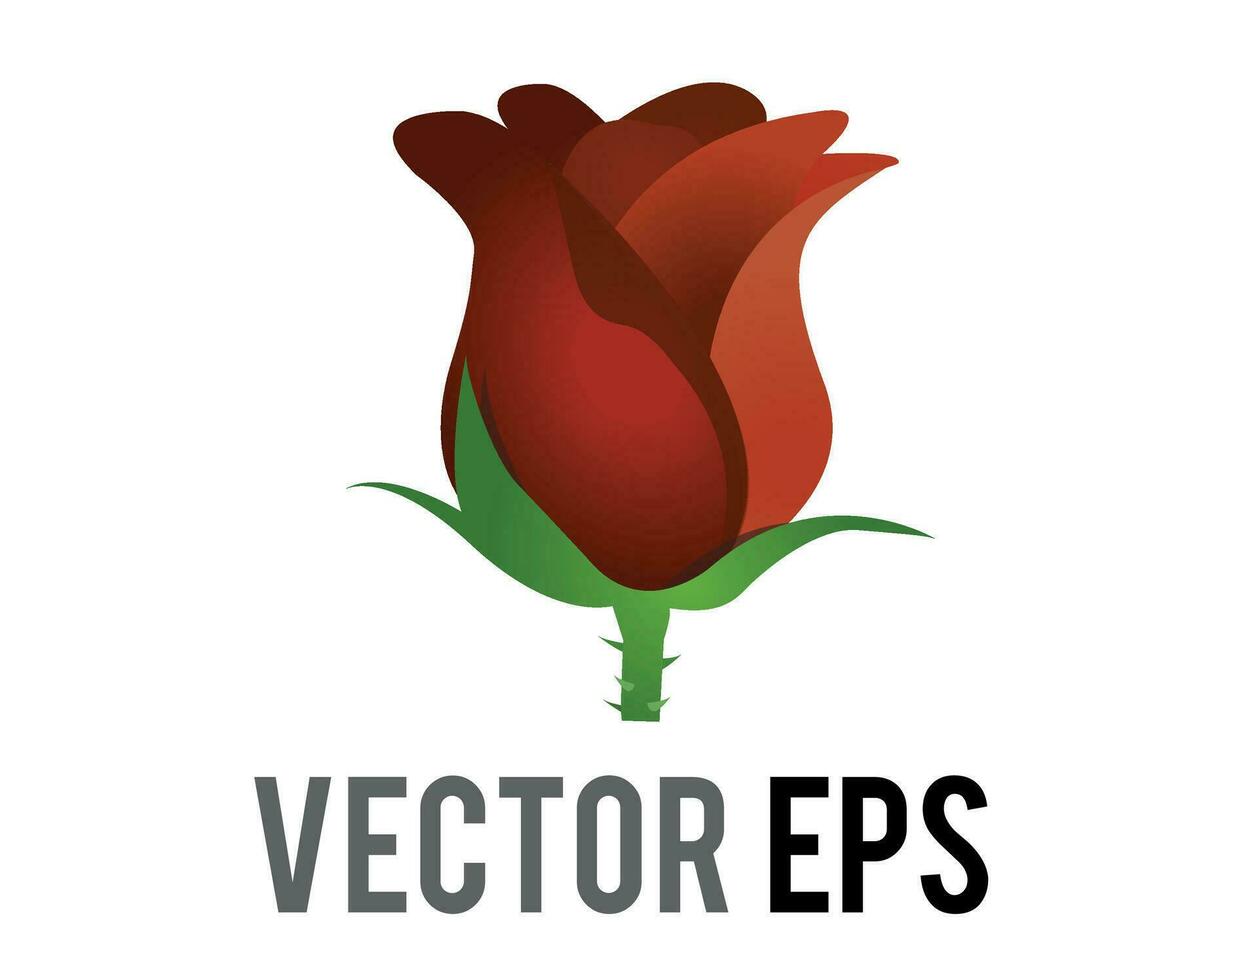 vector kastanjebruin donker rood roos bloem icoon met groen stam en bladeren